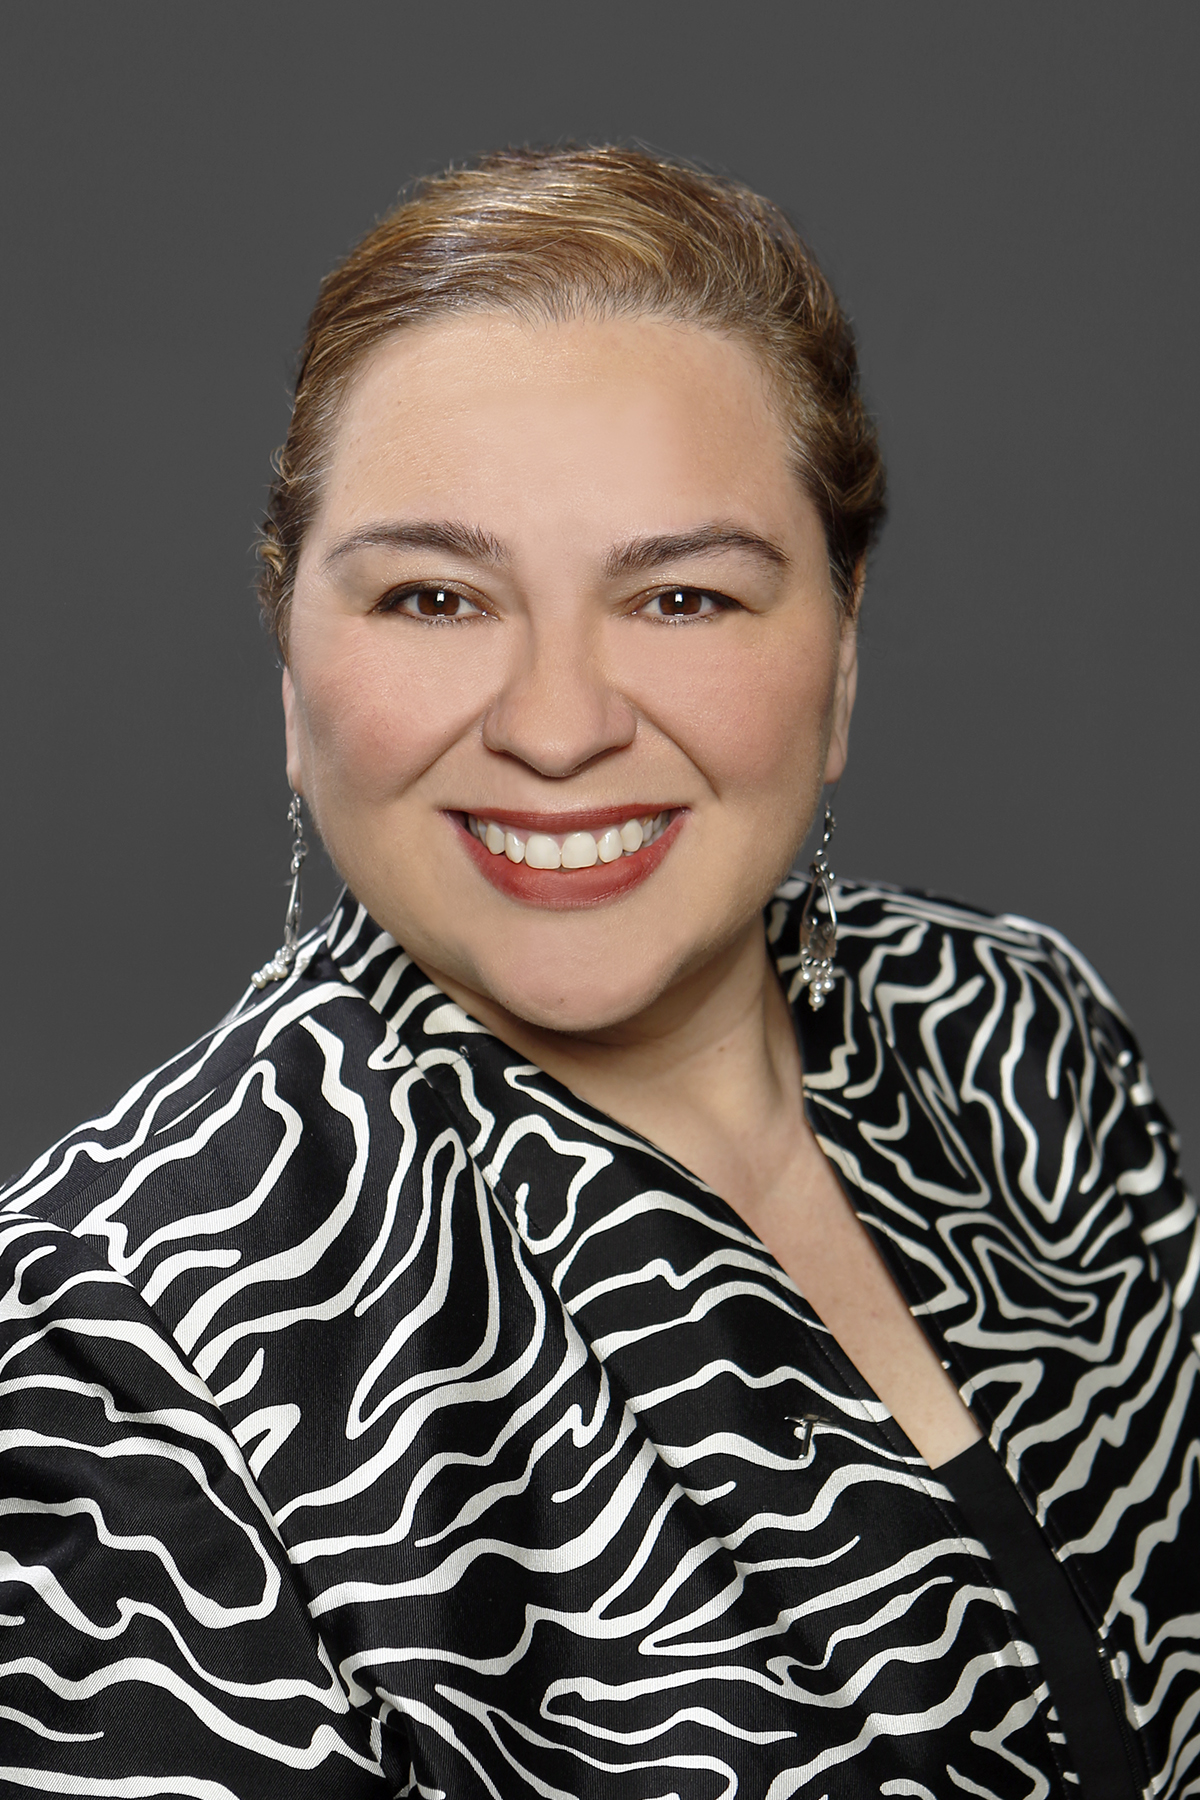 Dr. Guillermina Gina Núñez-Mchiri